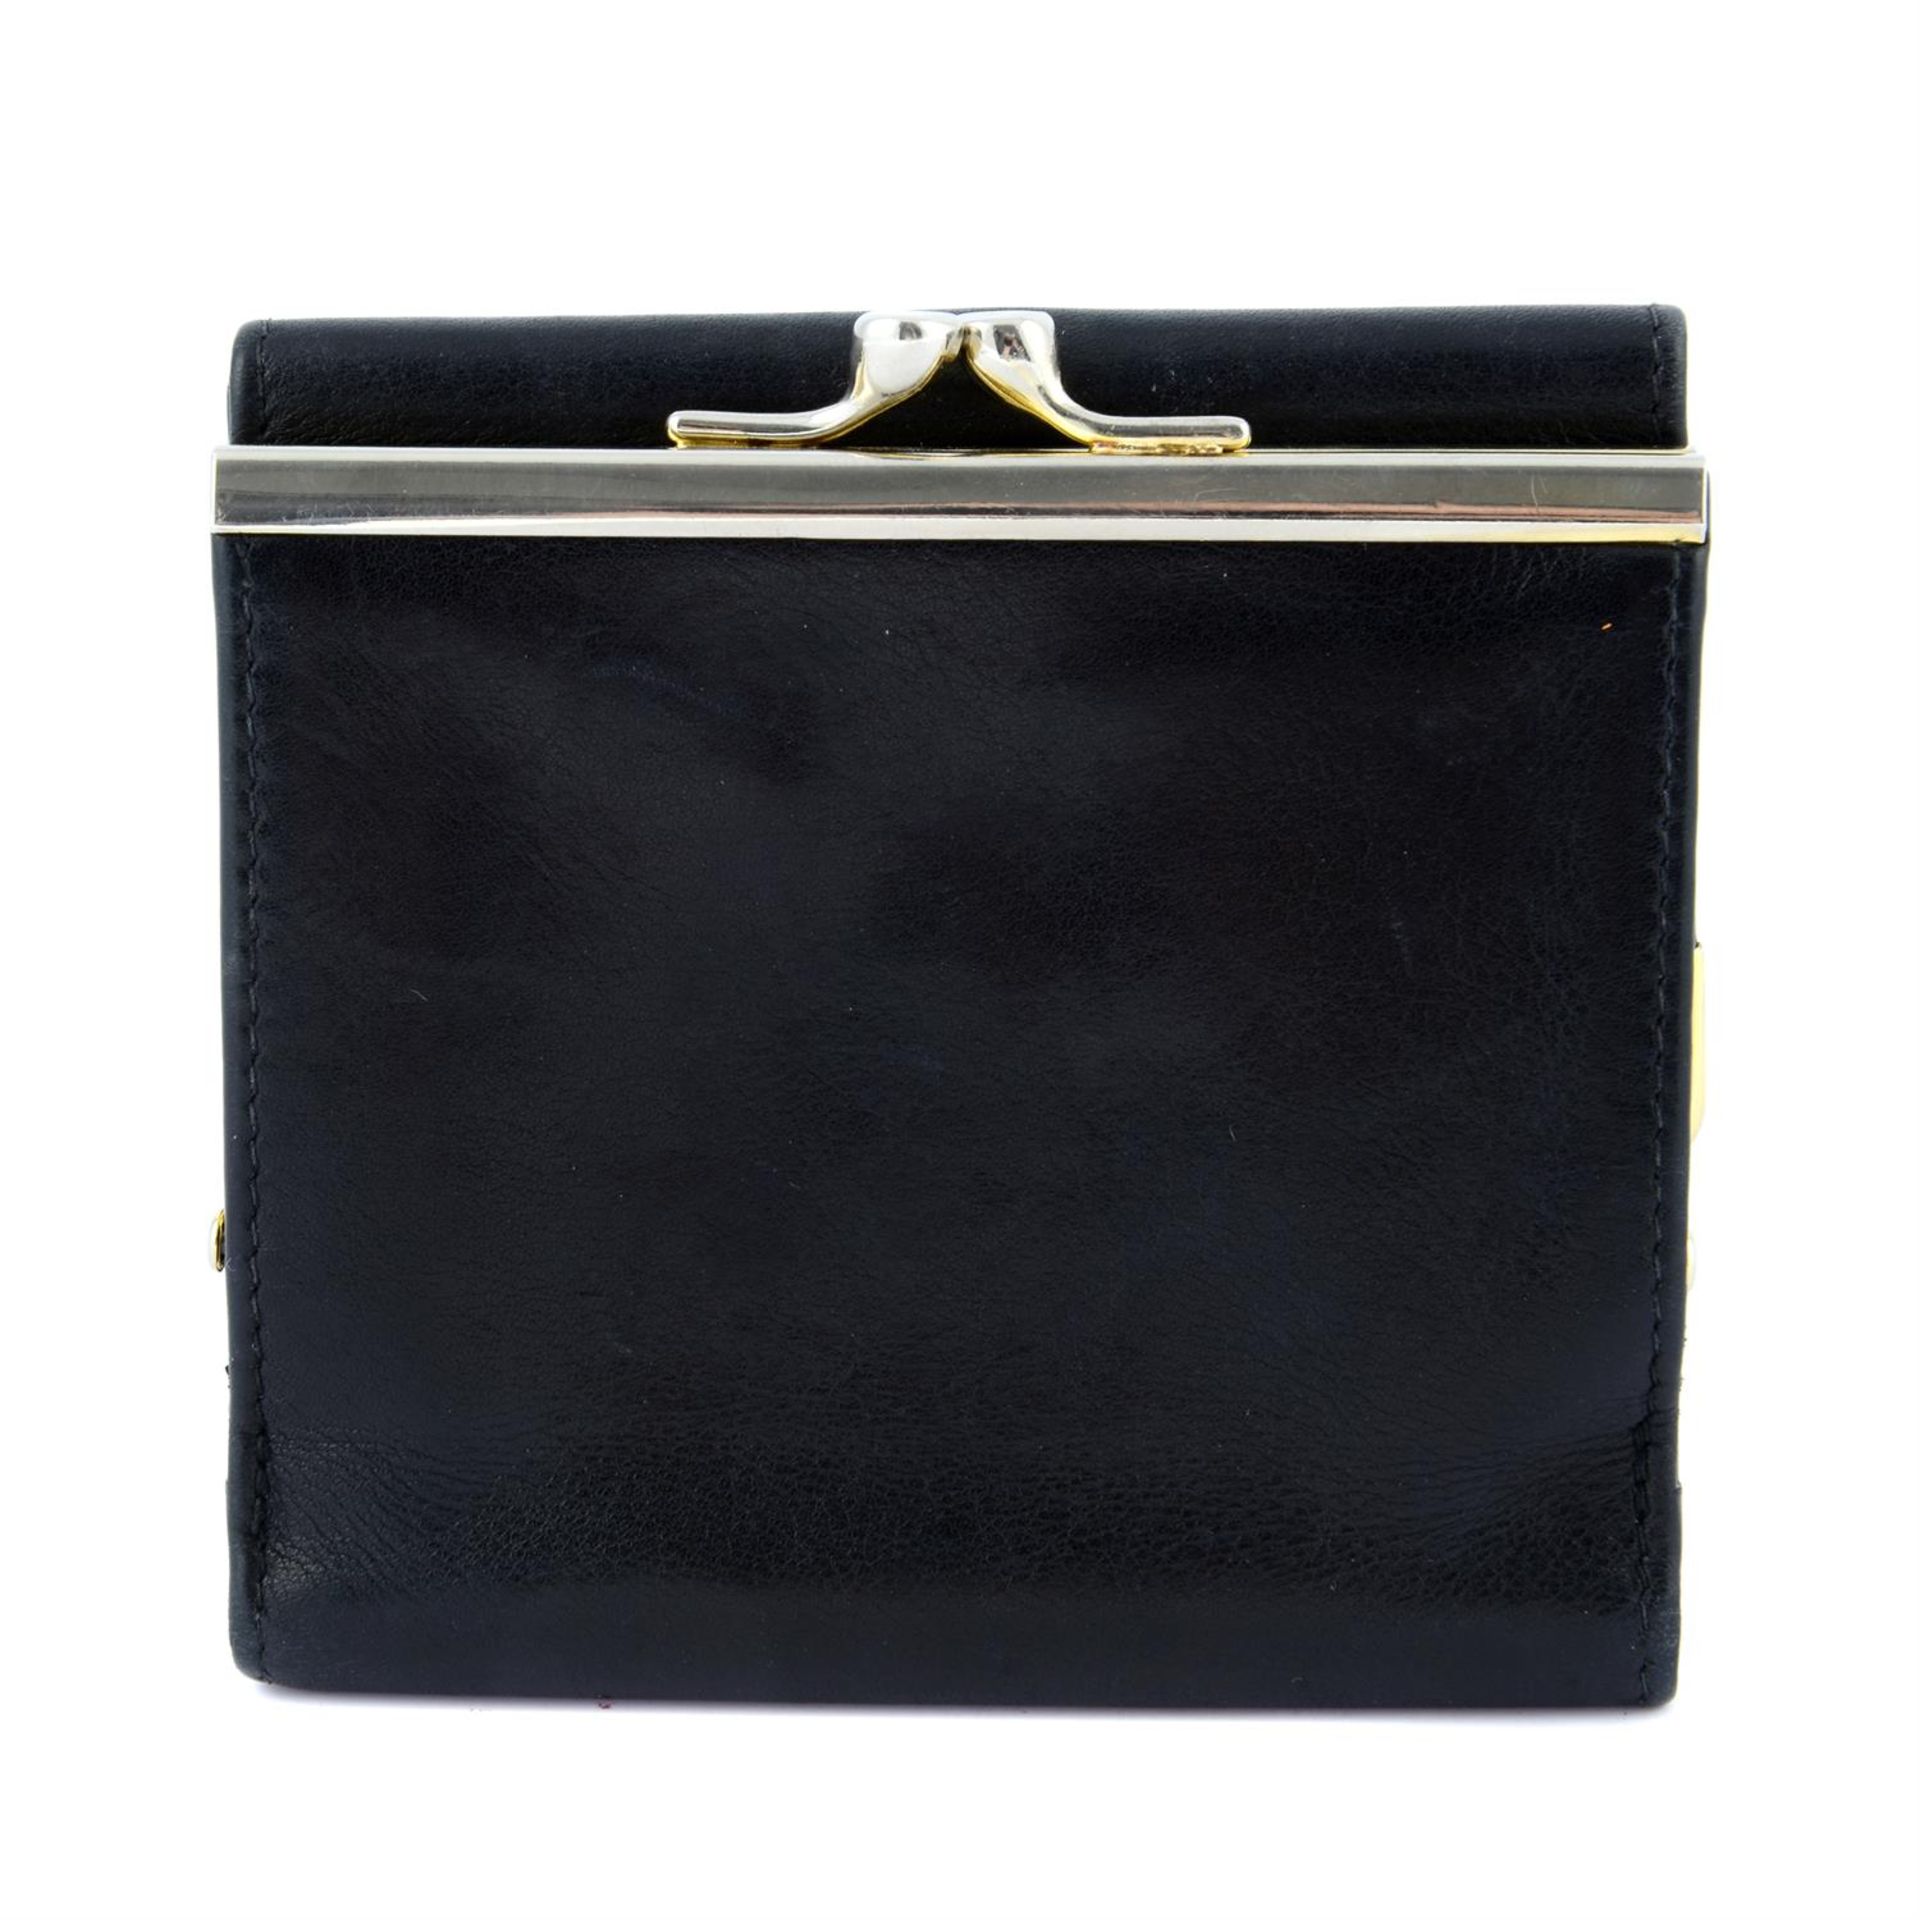 BALENCIAGA - a black leather compact wallet. - Image 2 of 3